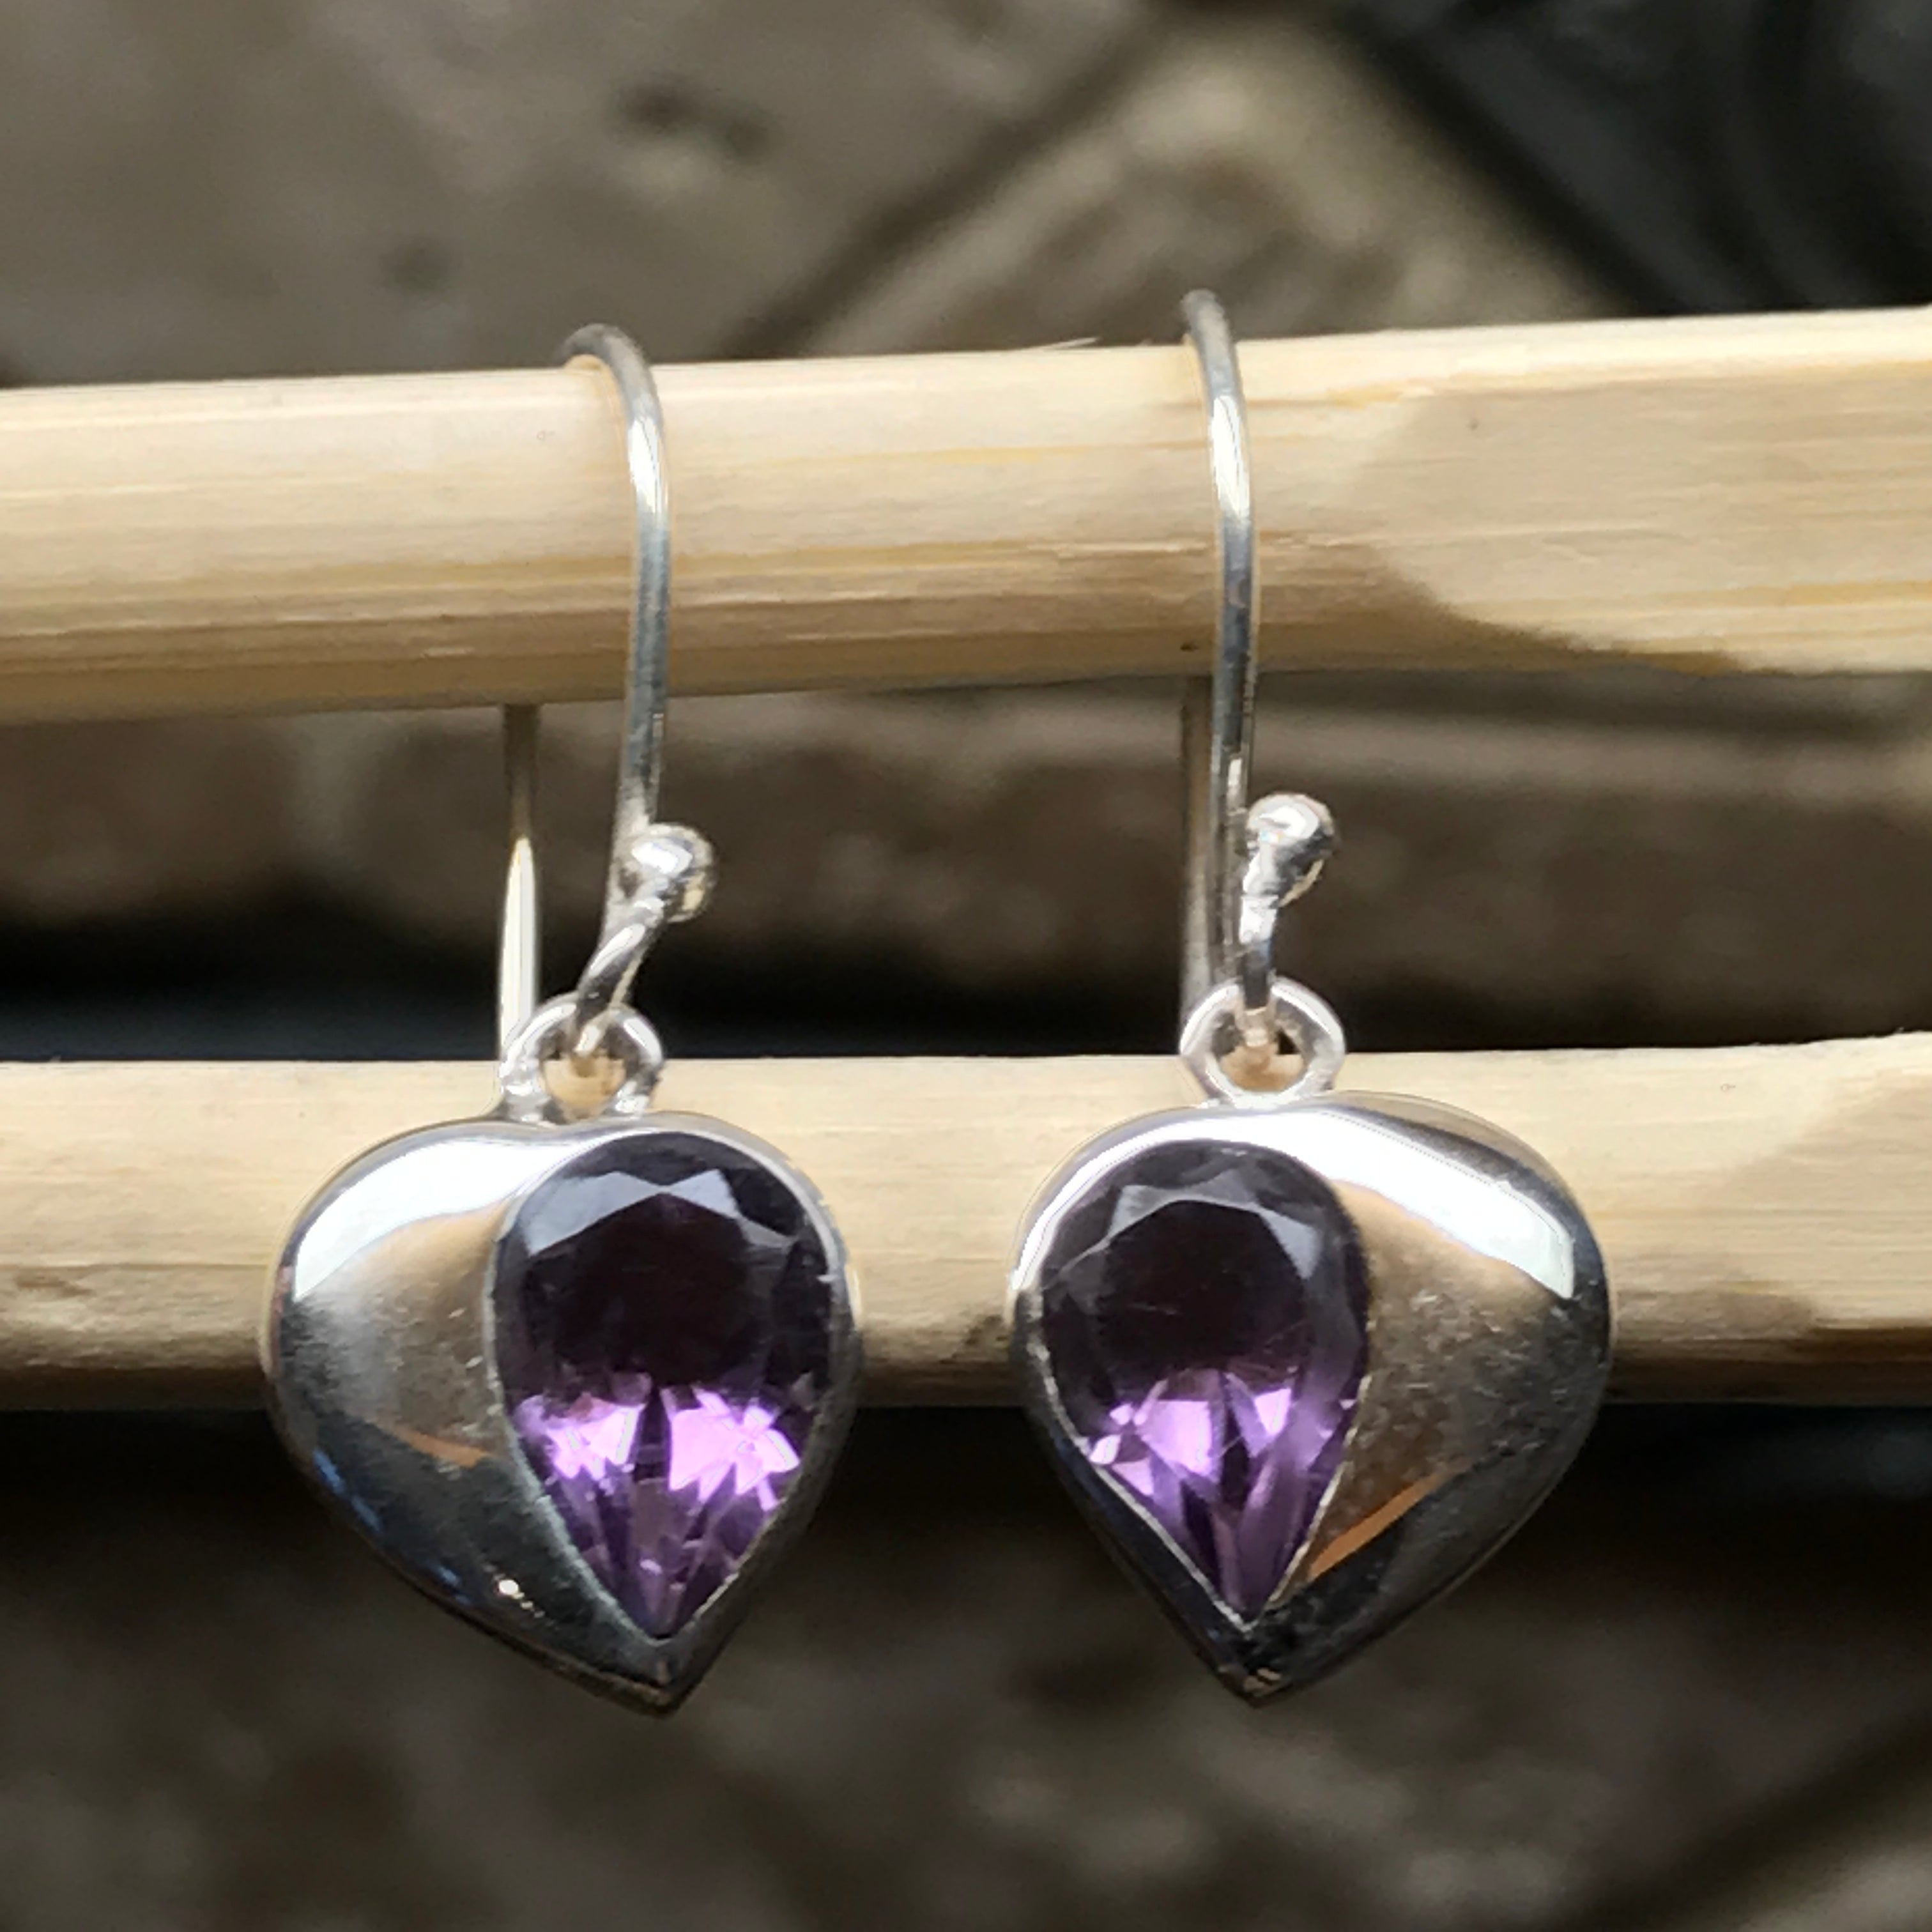 Natural 2ct Purple Amethyst 925 Solid Sterling Silver Heart Earrings 26mm - Natural Rocks by Kala